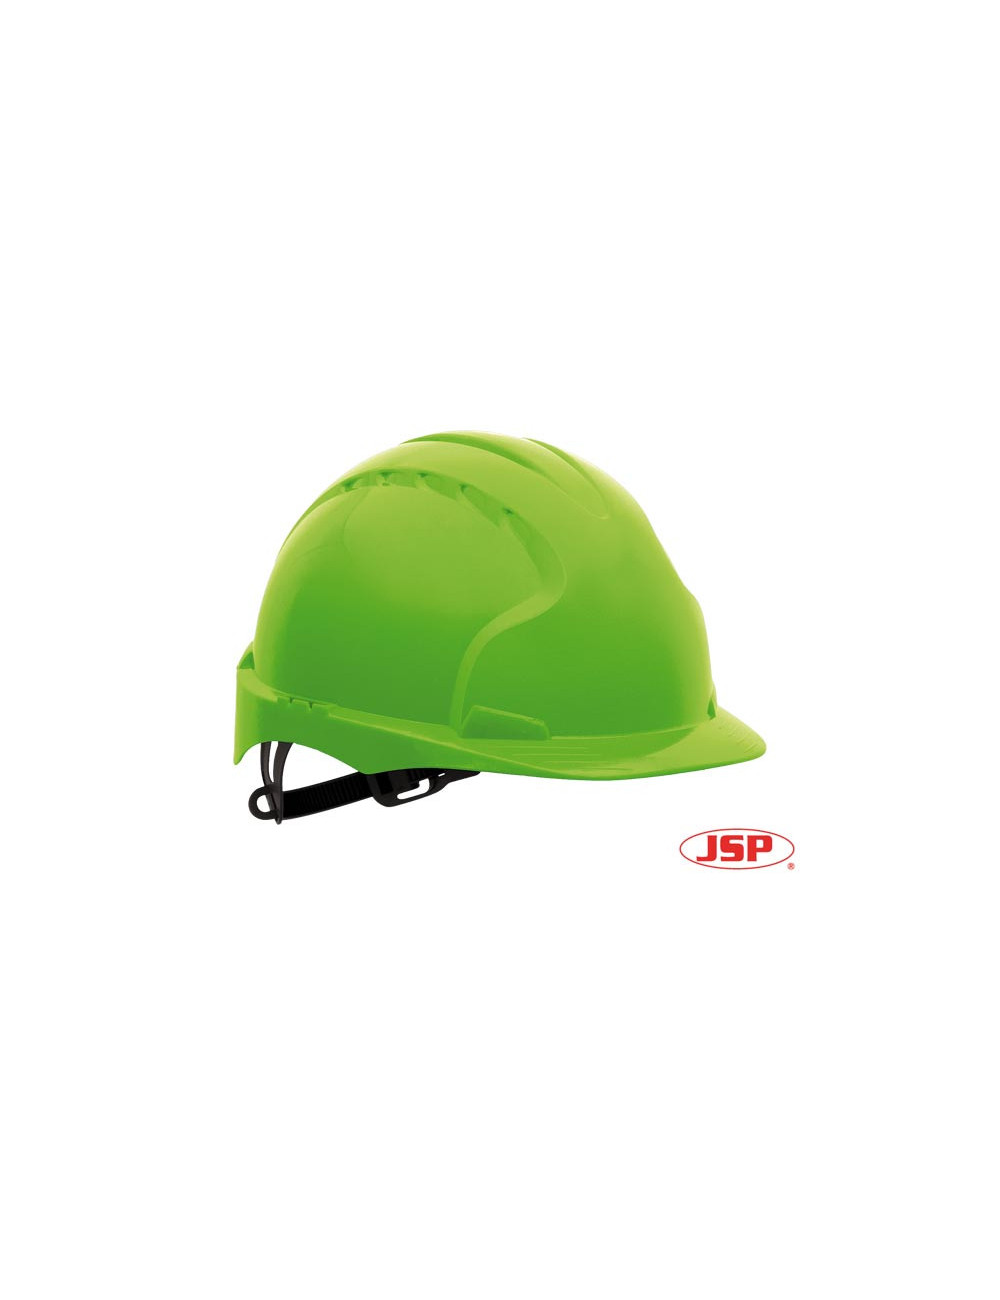 Protective helmet kas-evo3 with green Jsp